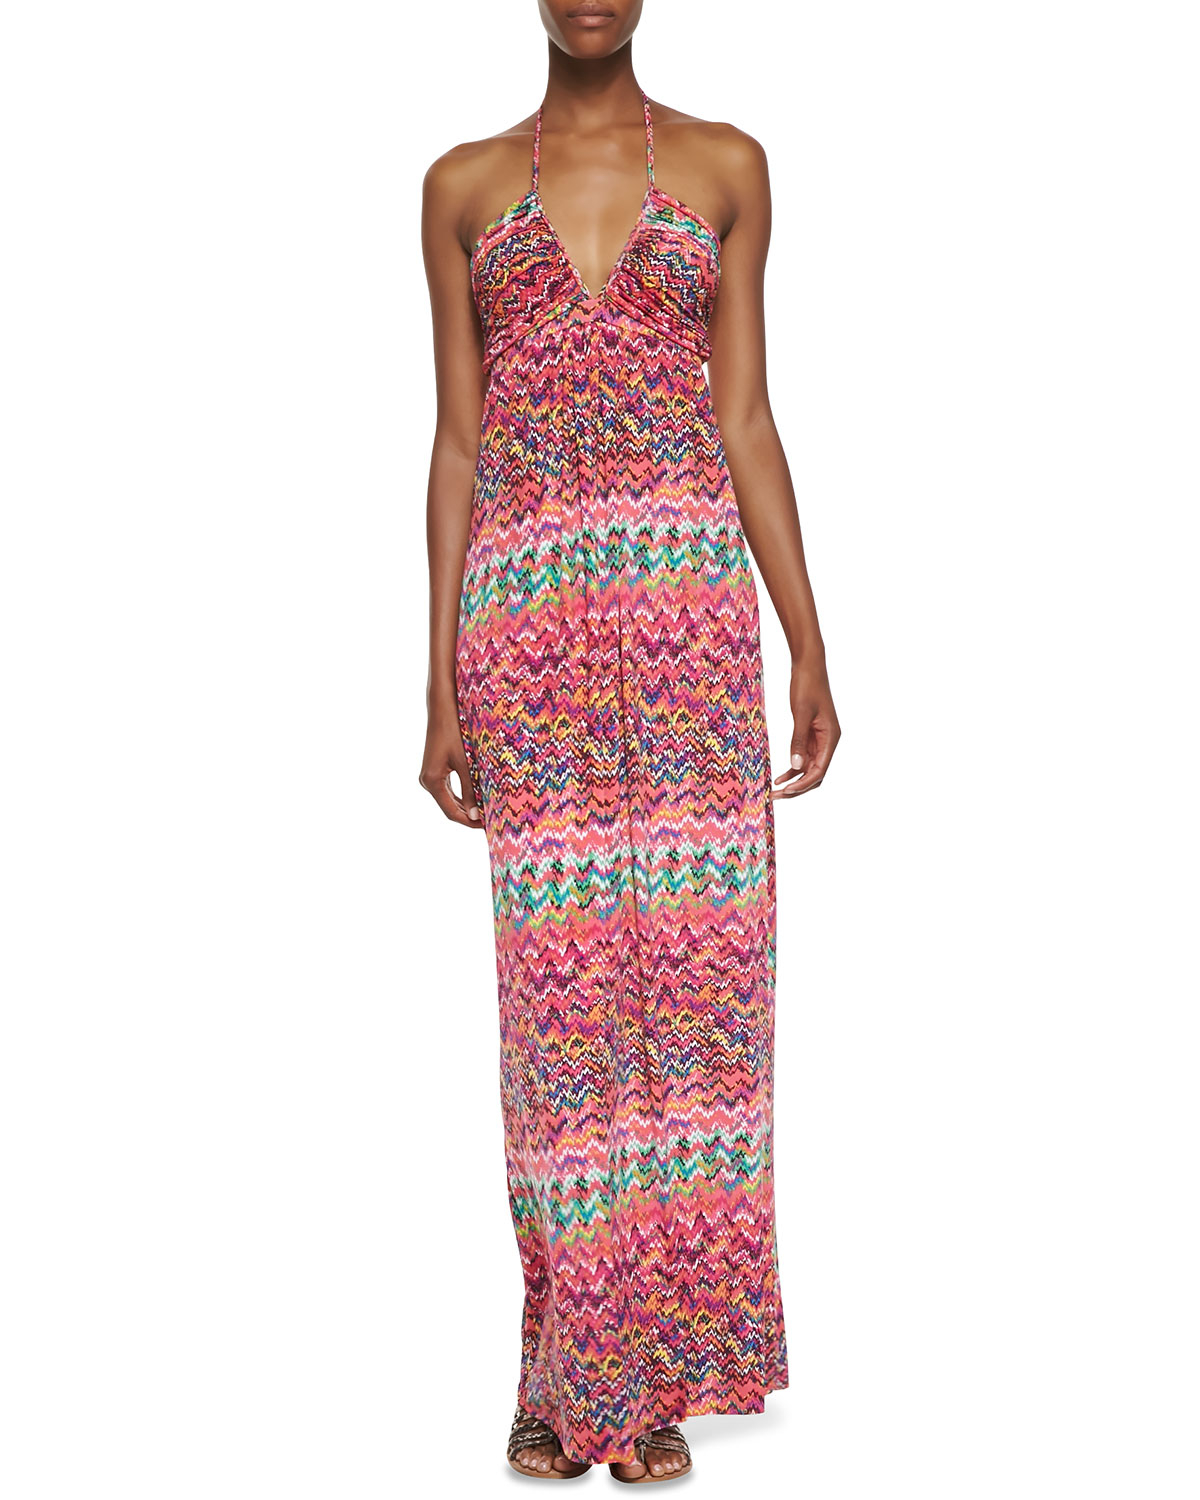 T-bags Zigzag Print Halter Maxi Dress in Multicolor (MULTI) | Lyst